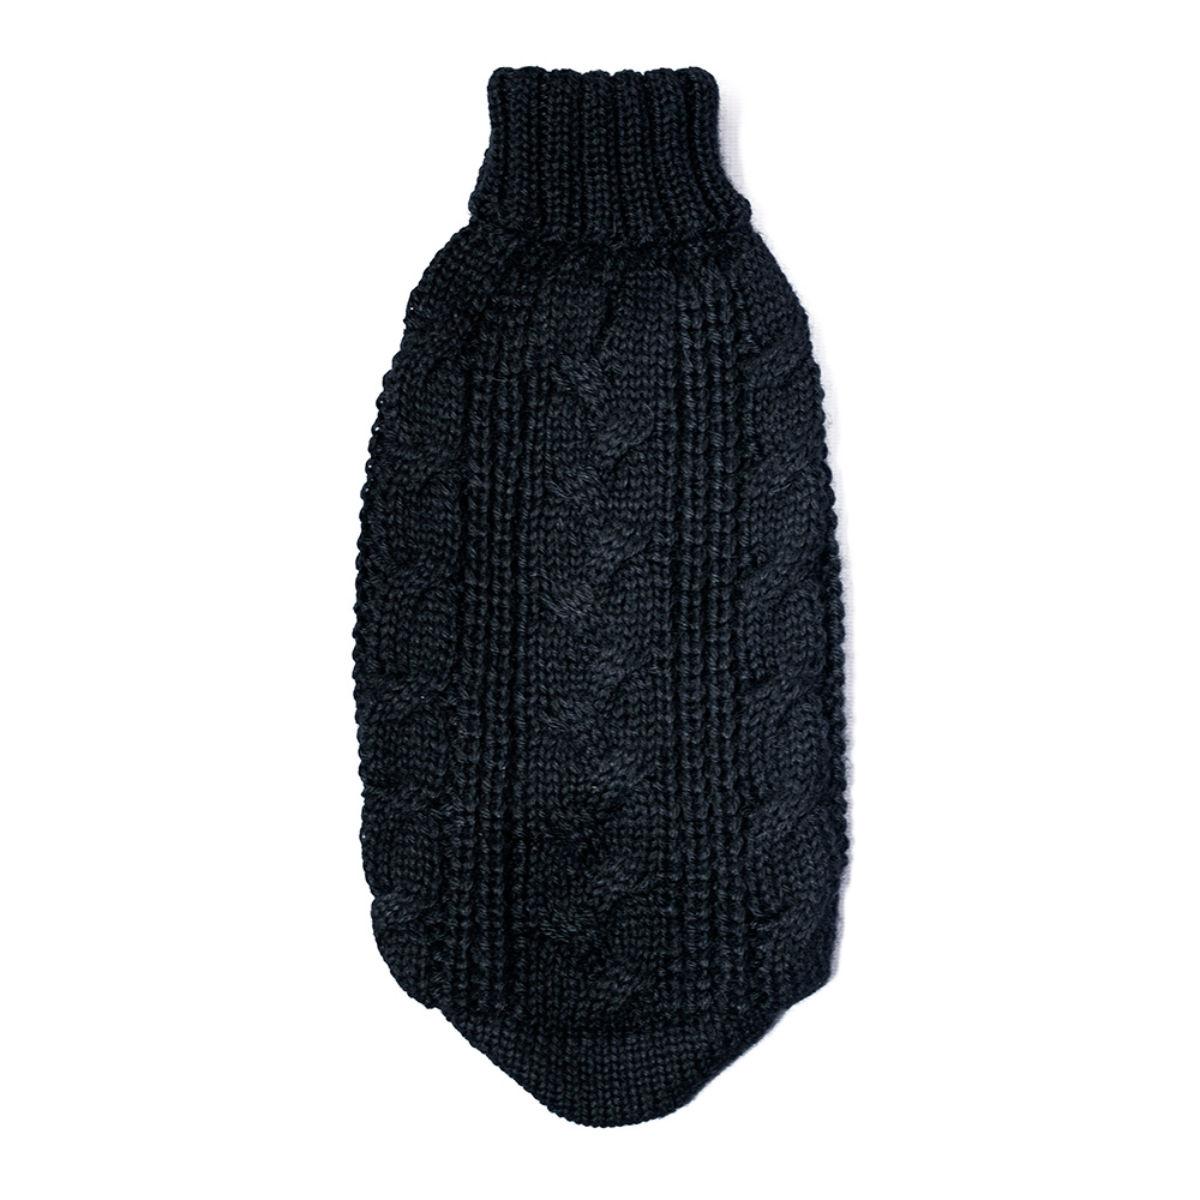 Alqo Wasi Chunky Cable Knit Alpaca Dog Sweater - Black